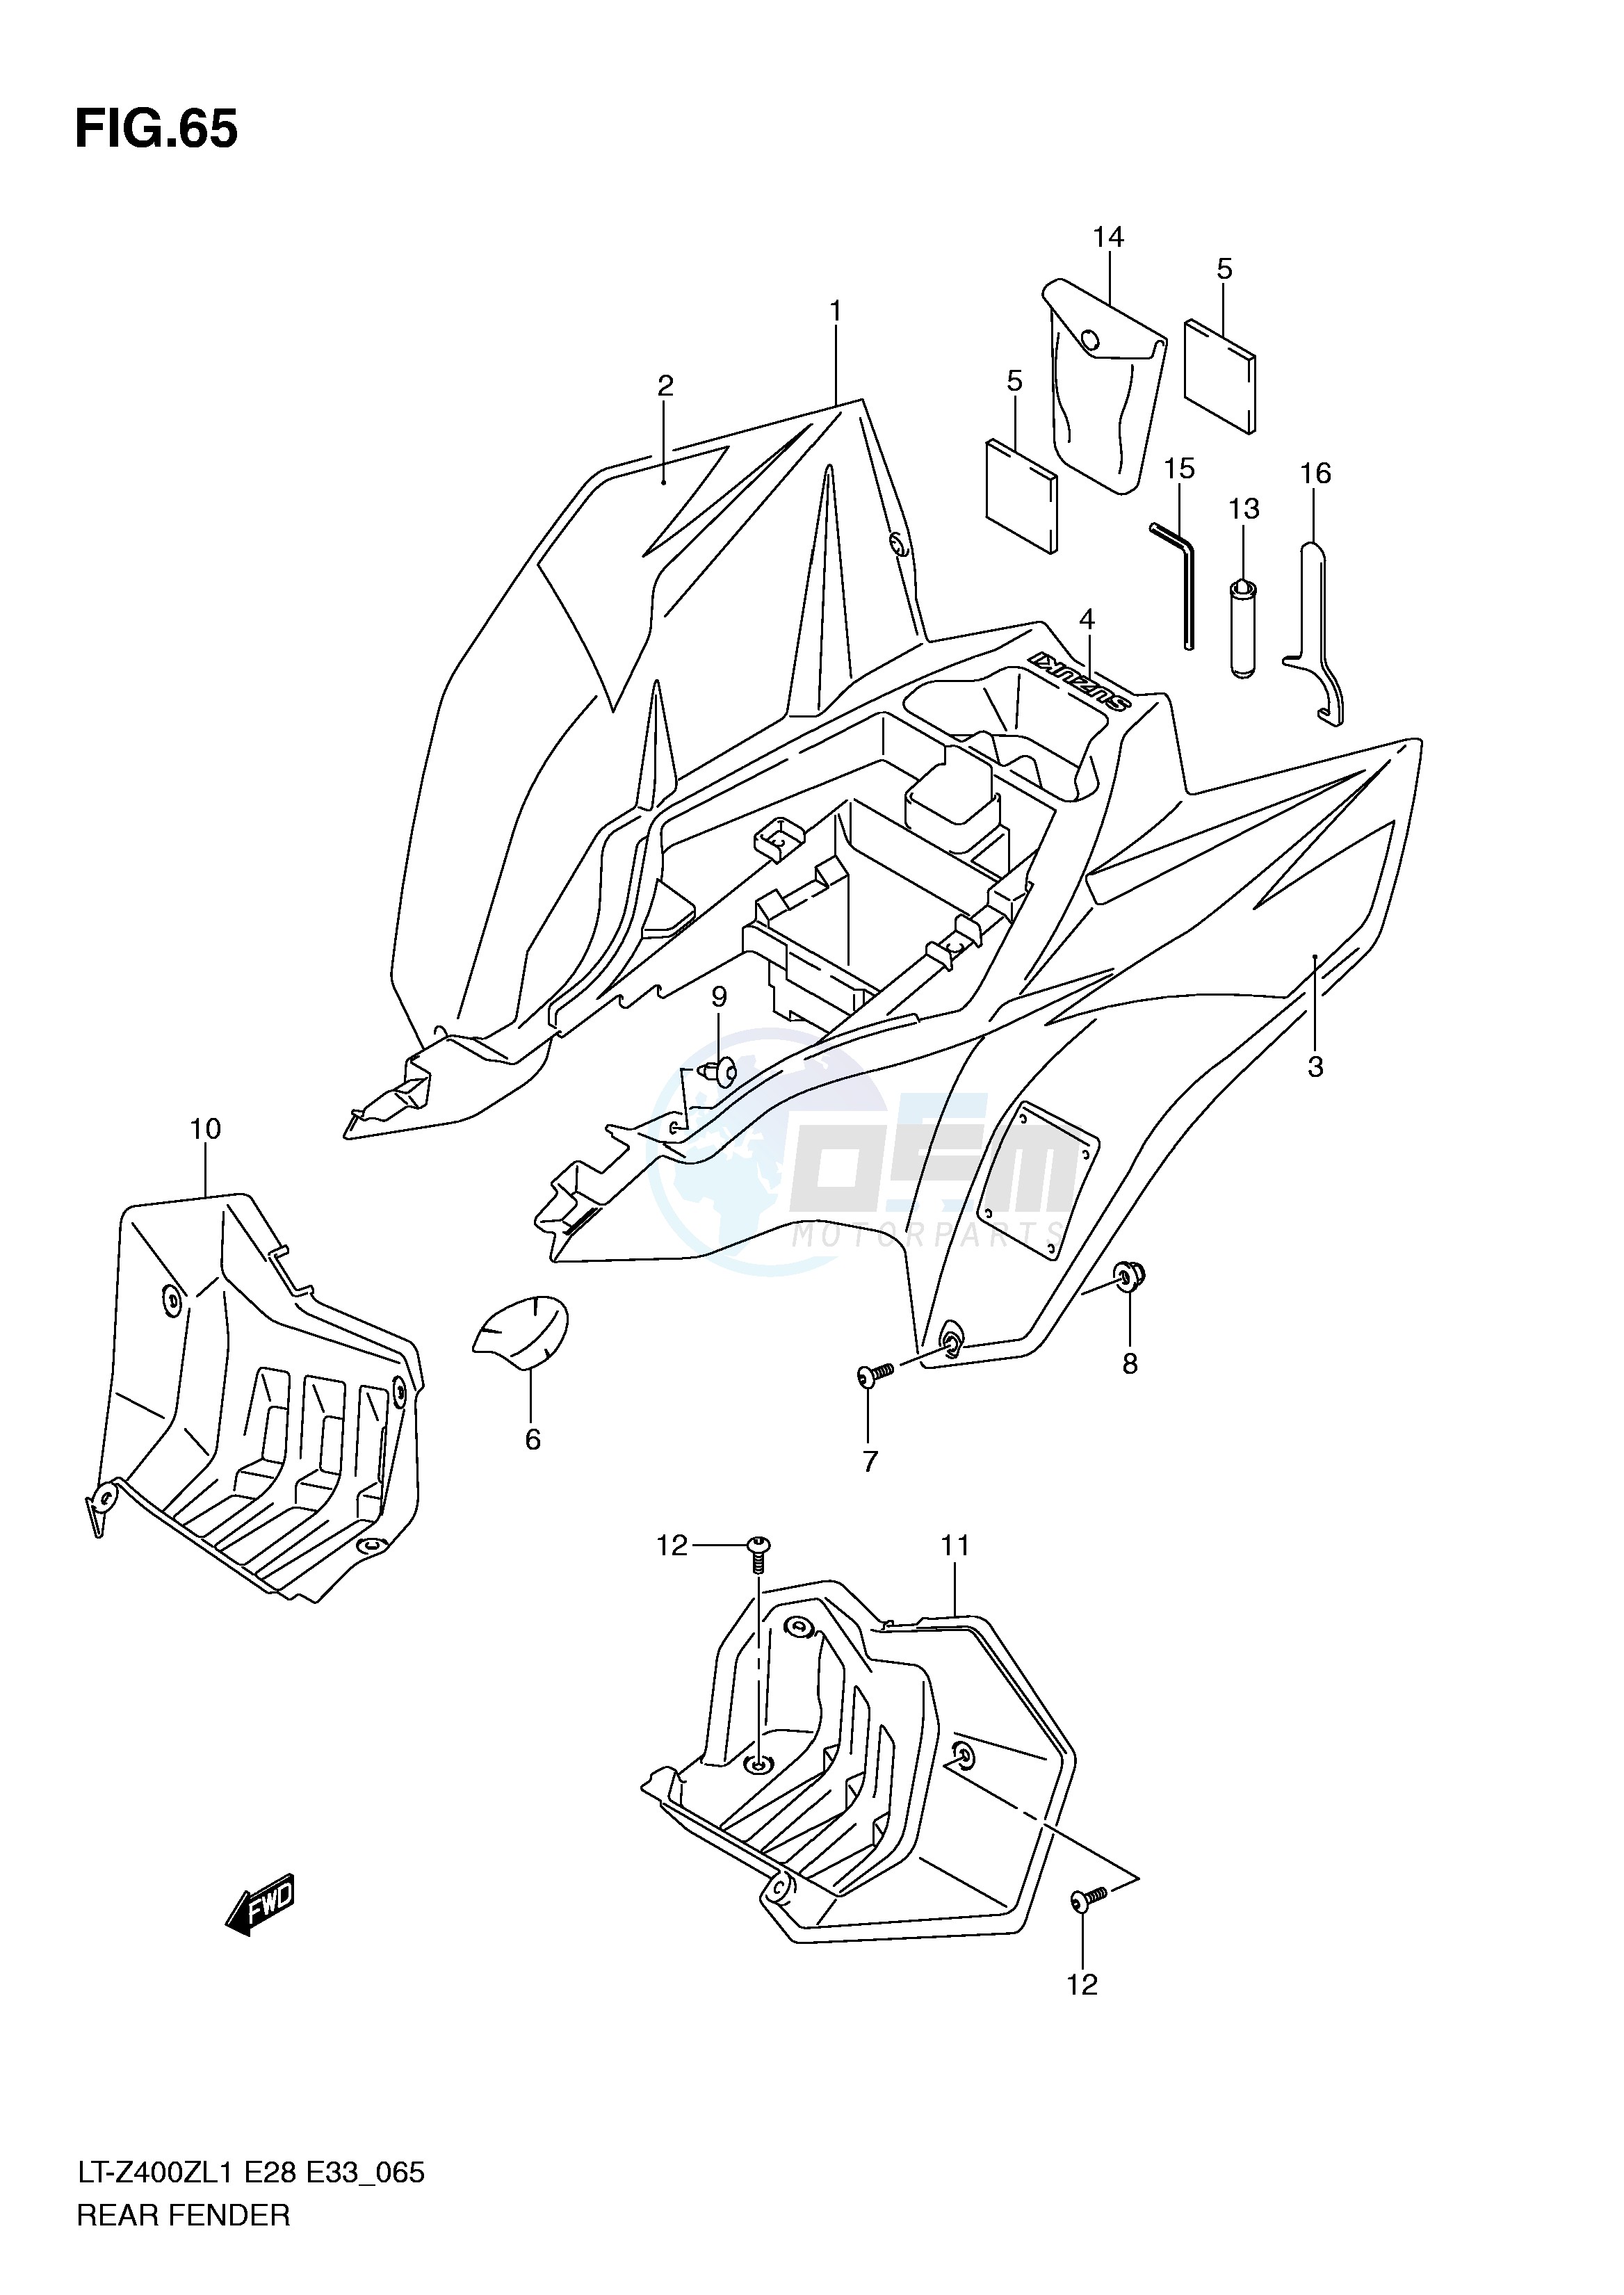 REAR FENDER (LT-Z400L1 E33) blueprint